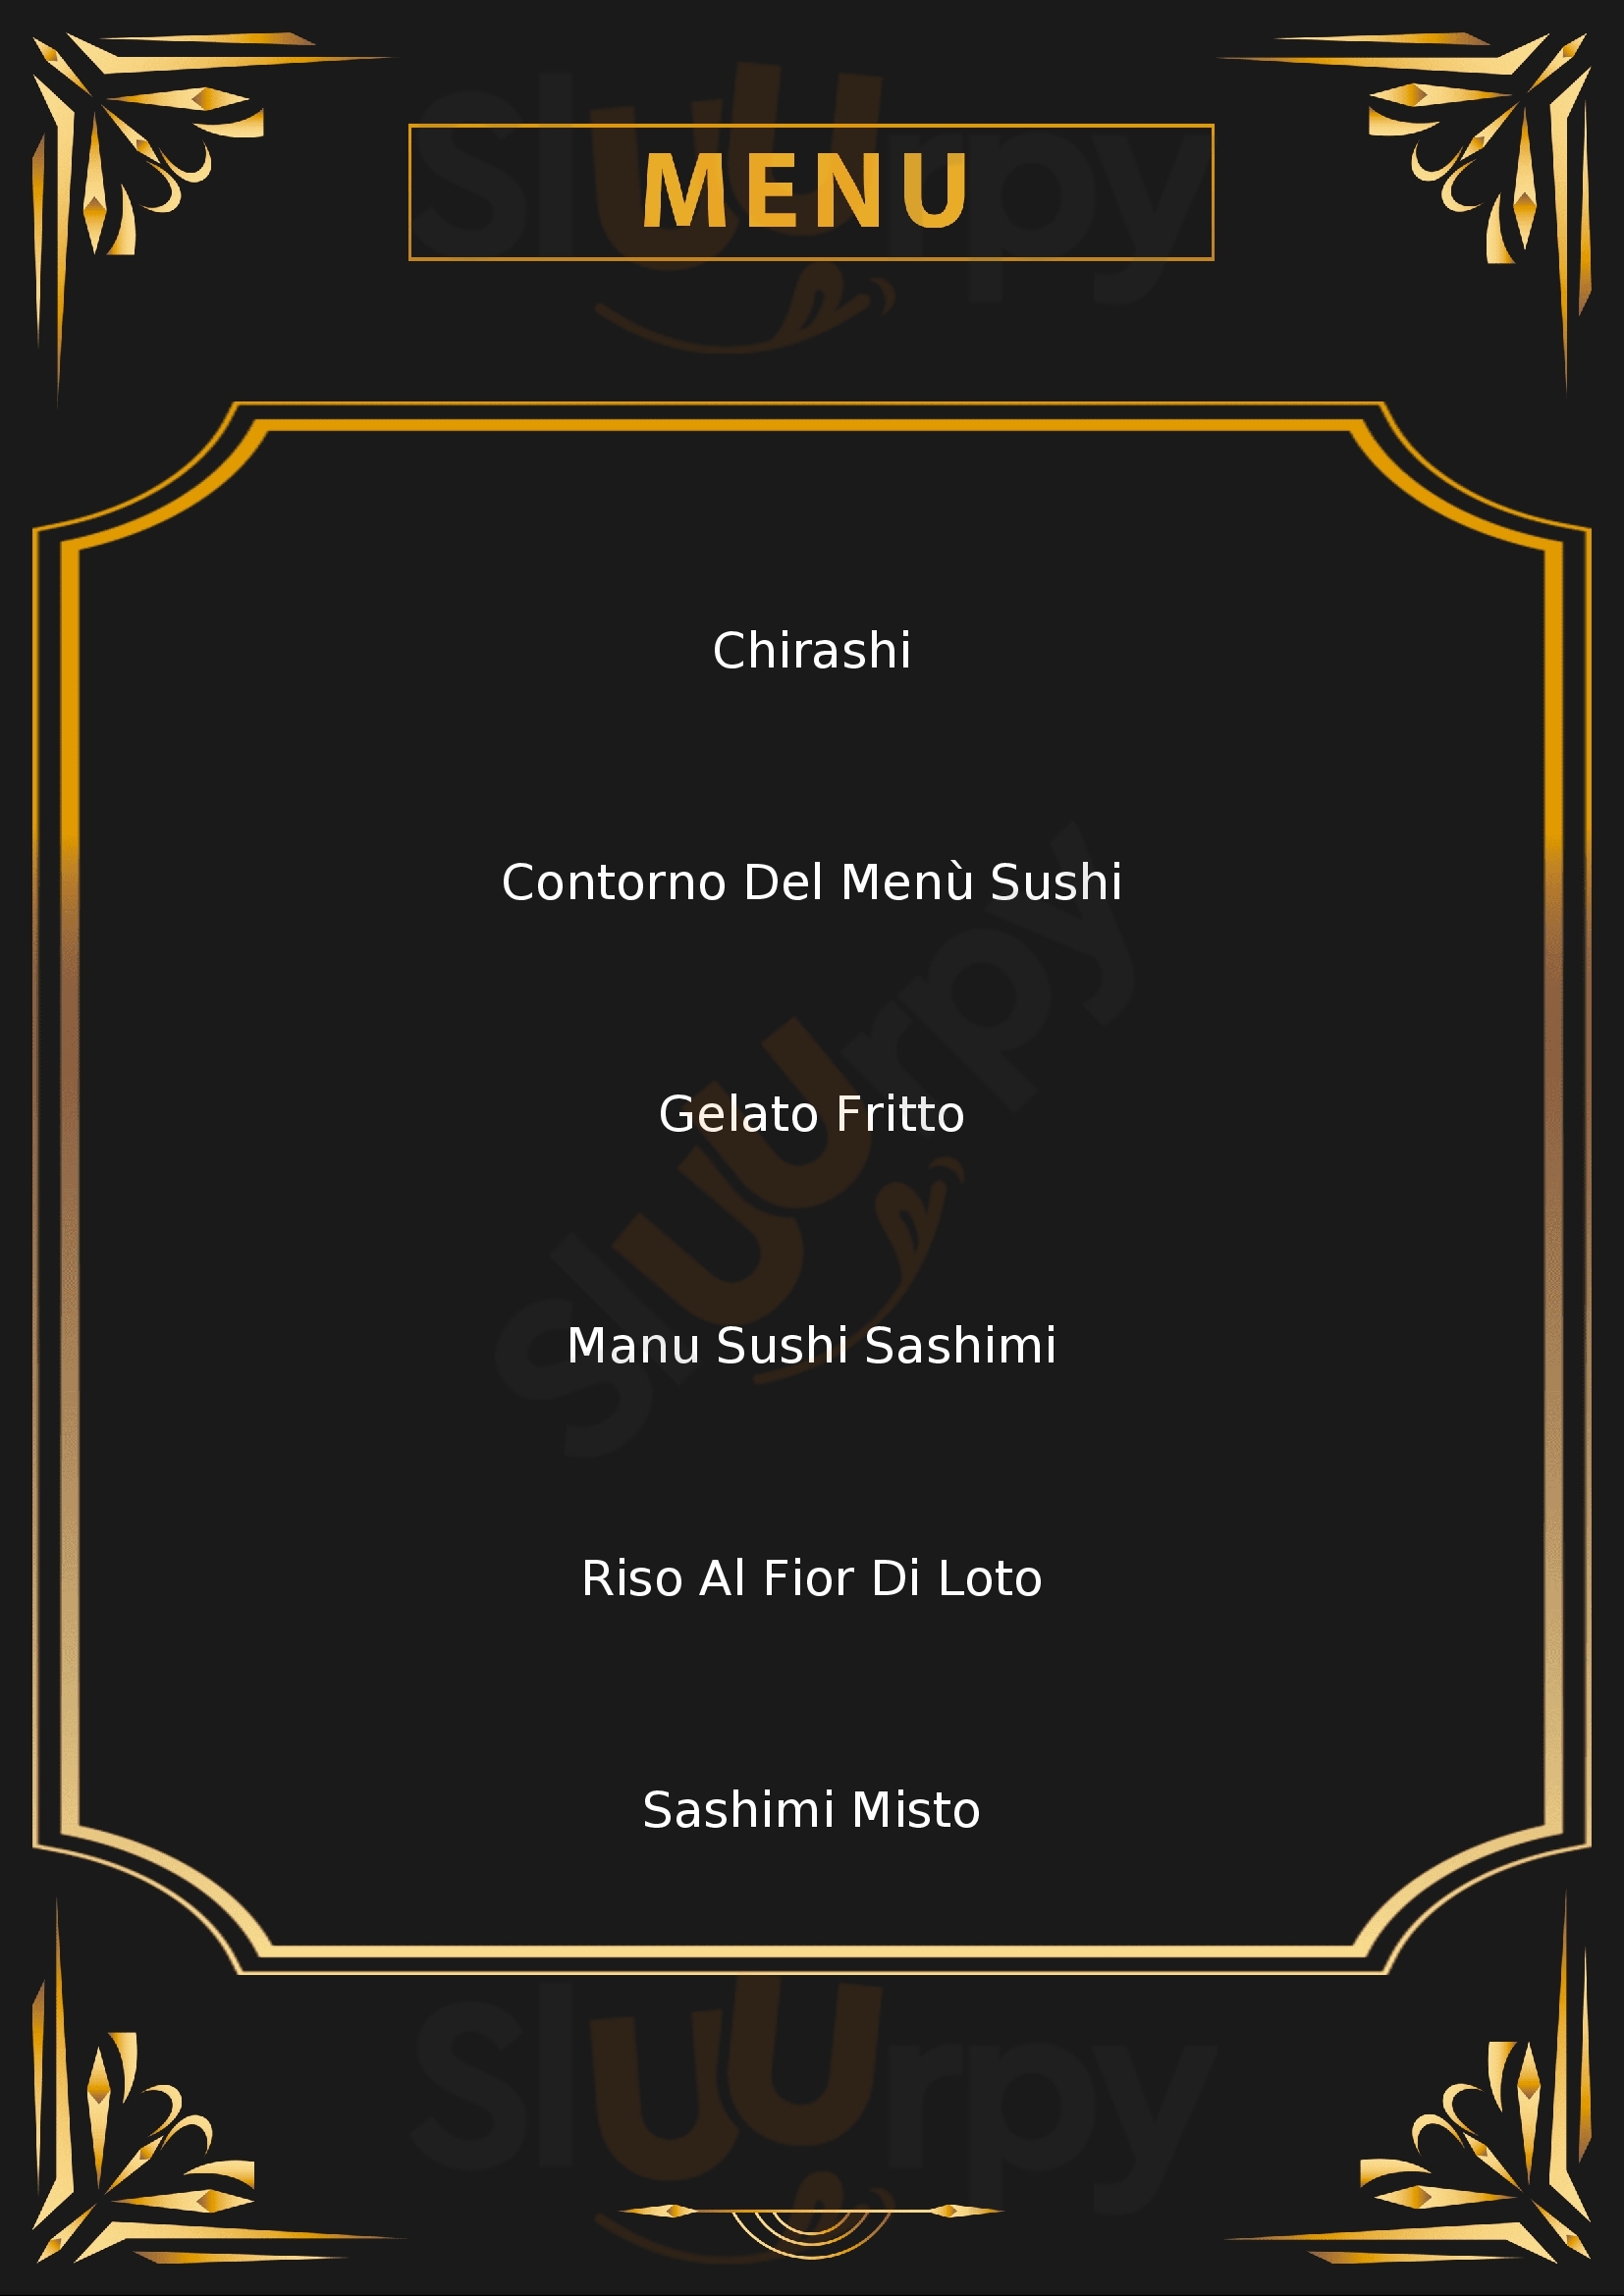 HARU Japan Fusion Restaurant Varese menù 1 pagina